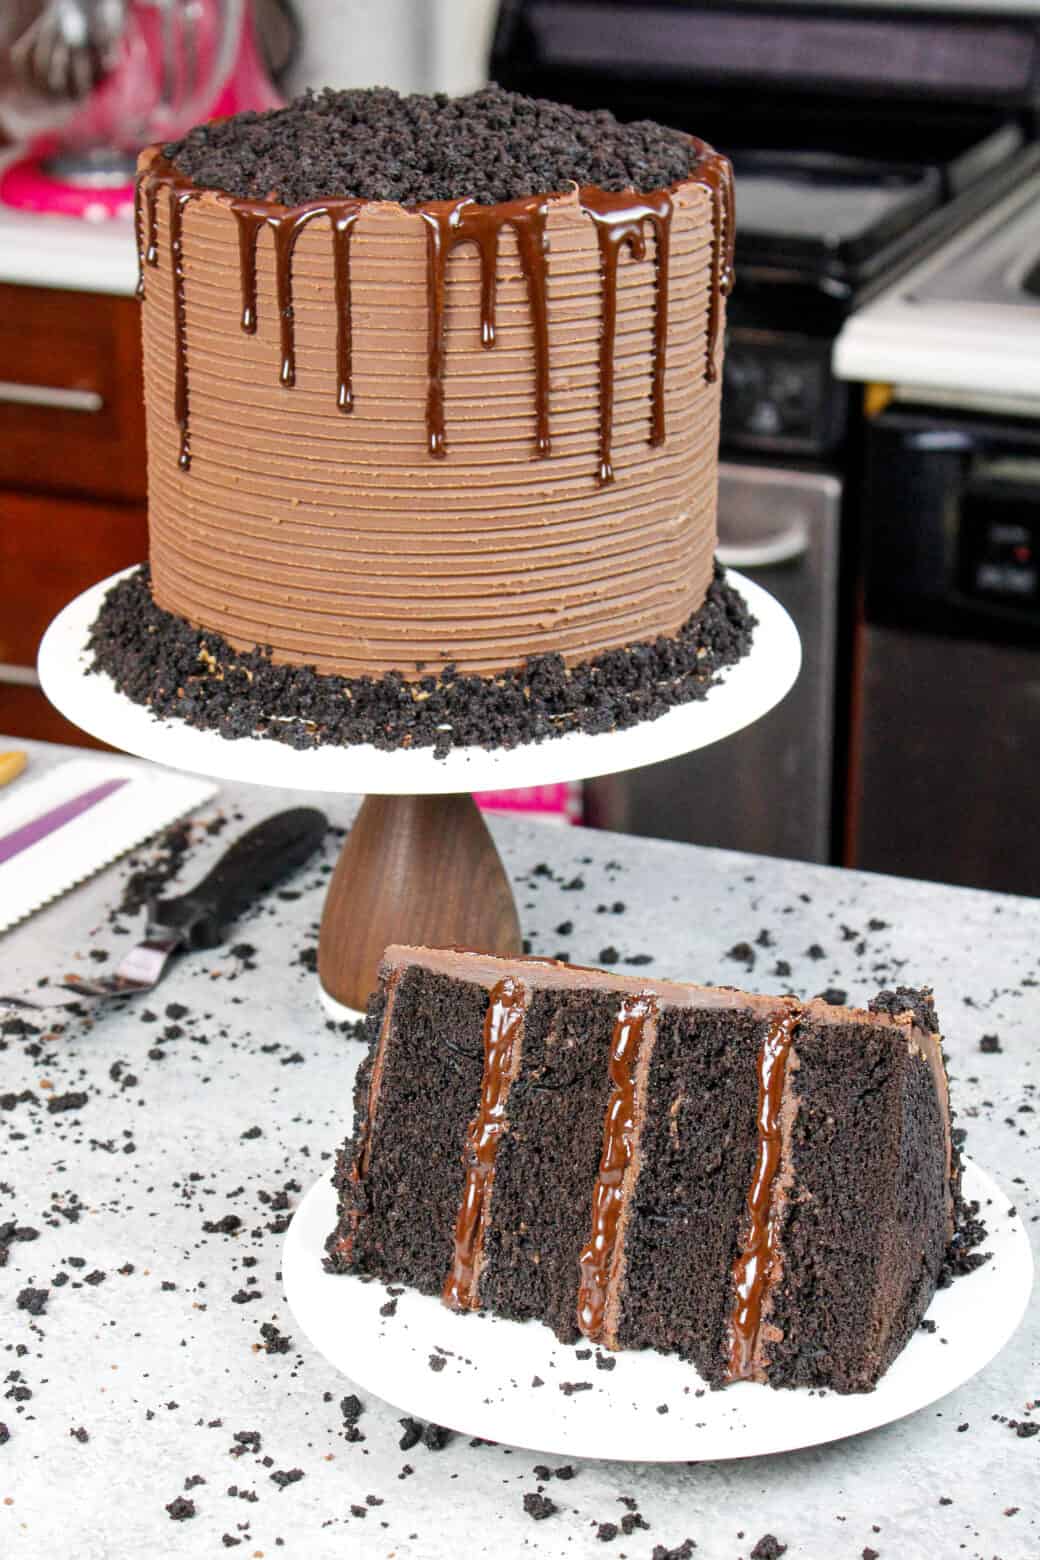 Chocolate Layer Cake Recipe: Delicious, From-Scratch Recipe